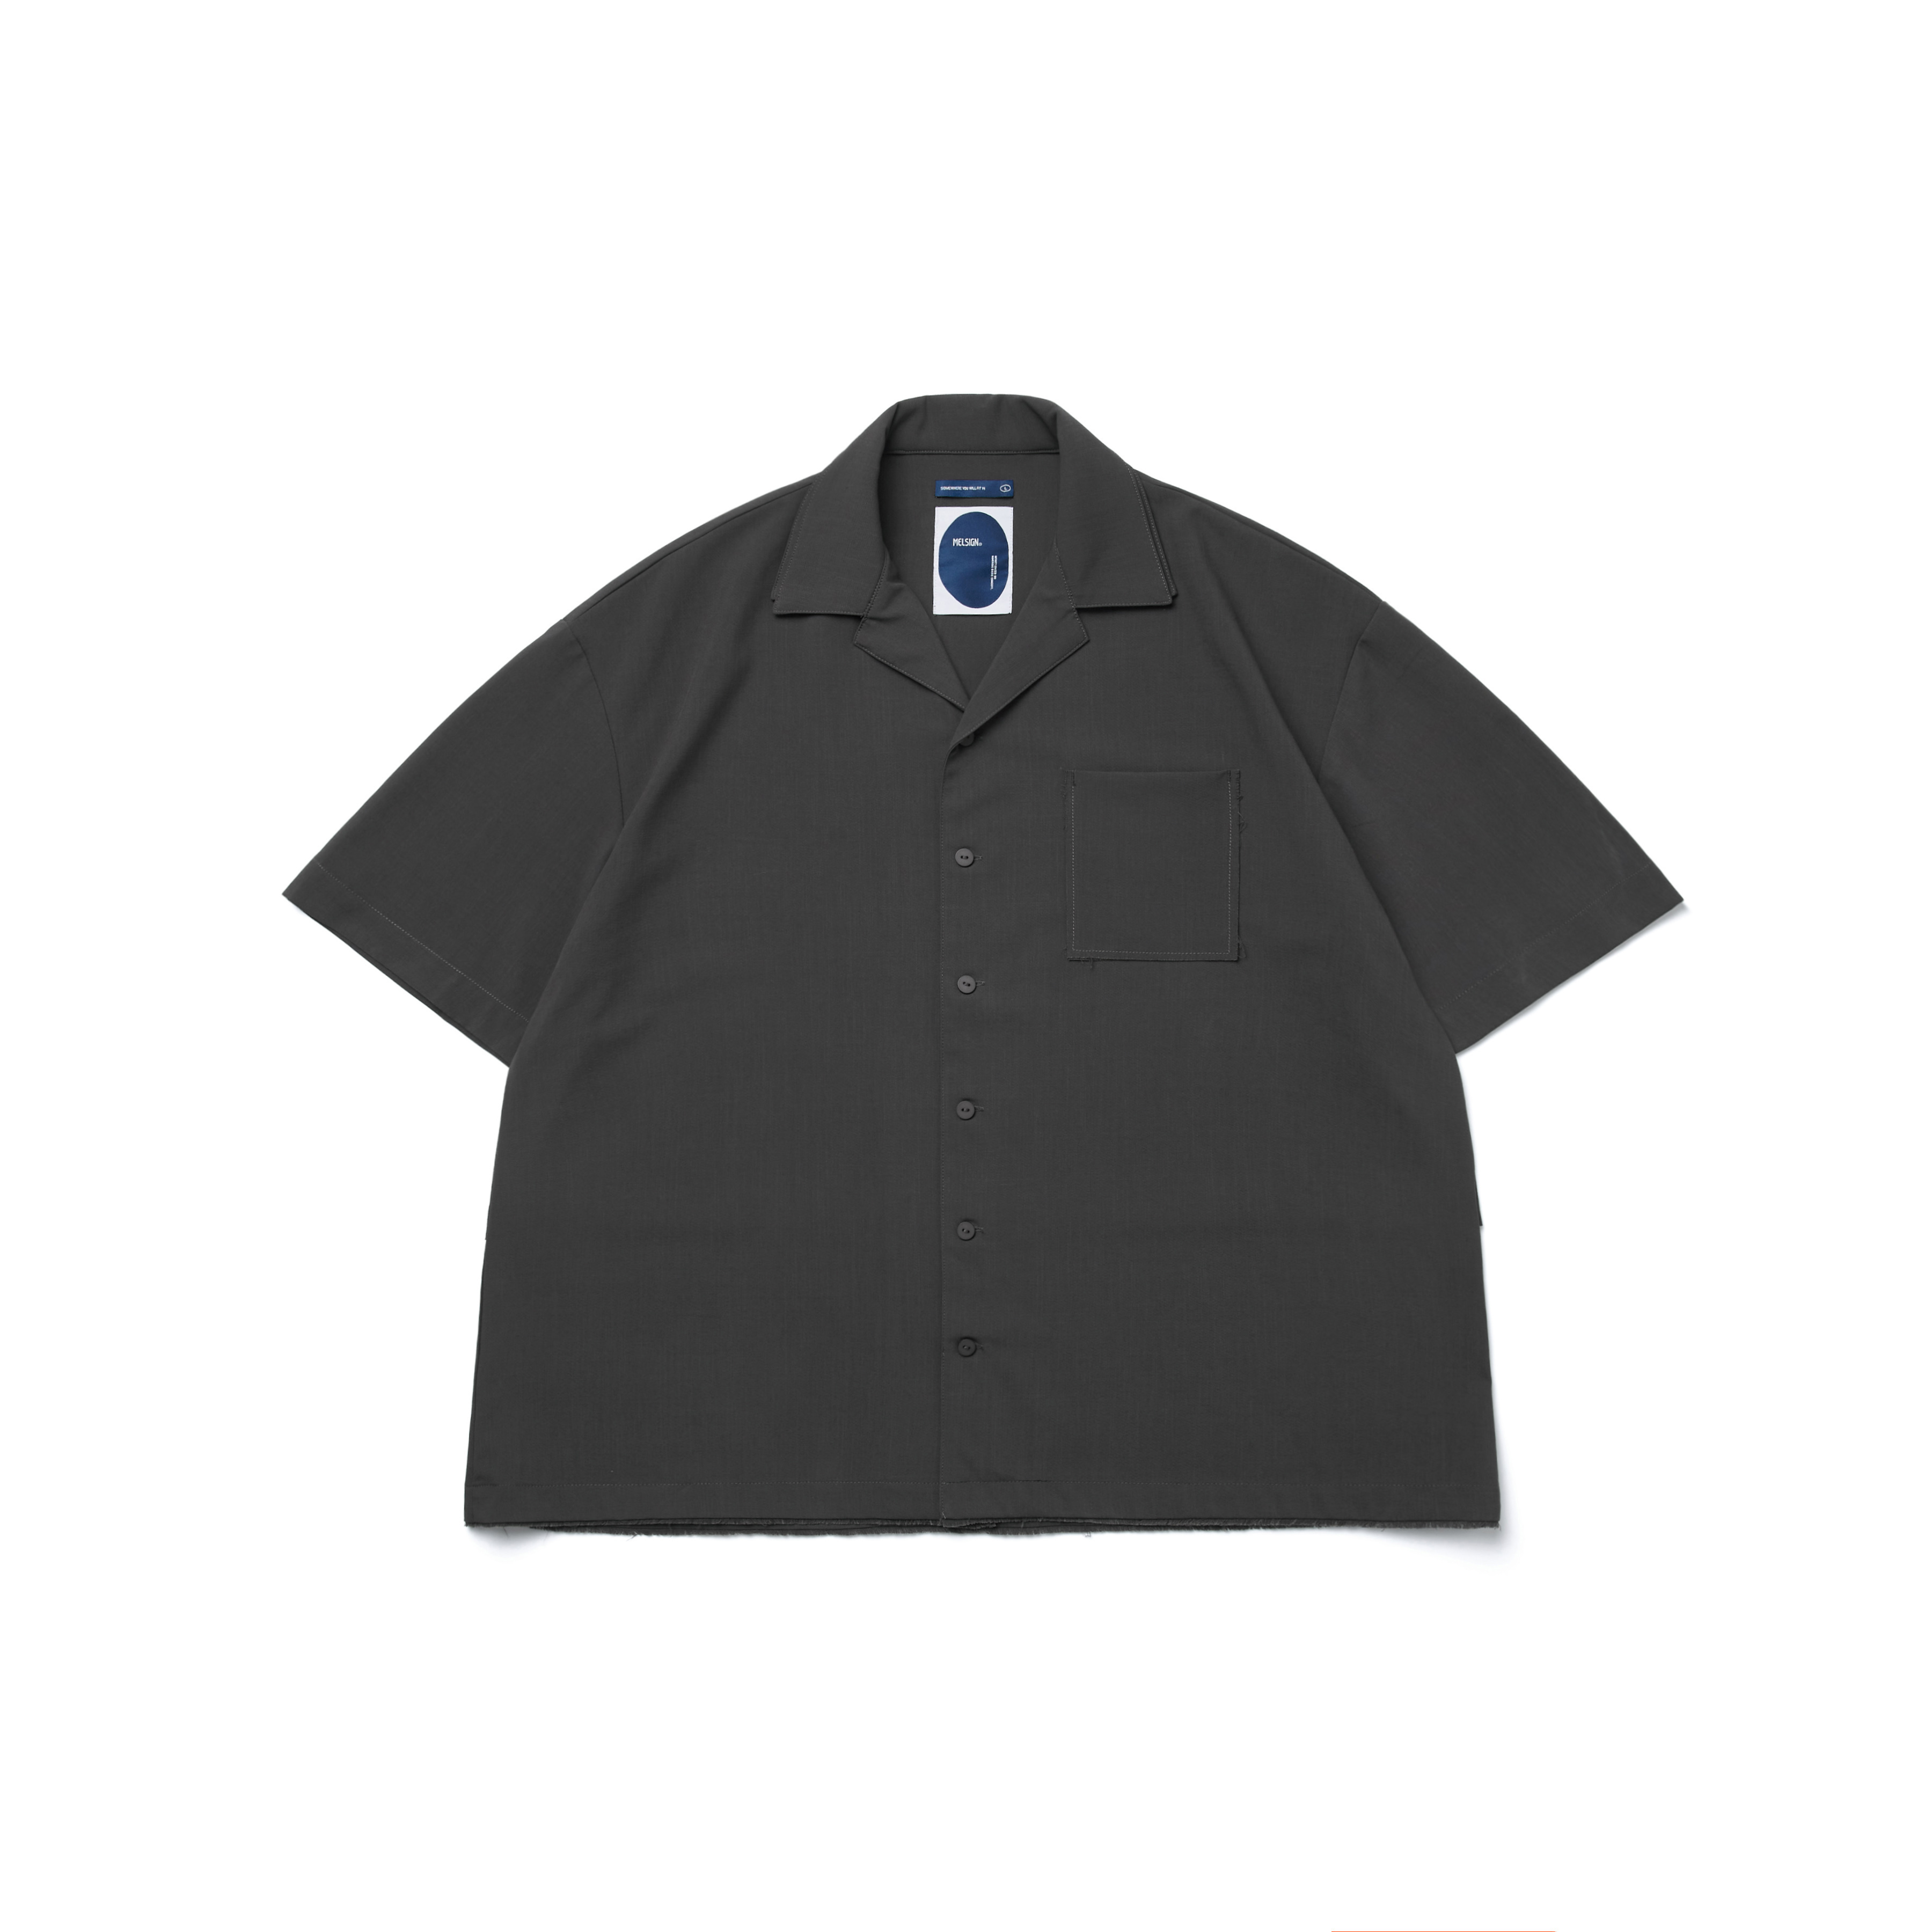 MELSIGN - Dual Weave Shirt - Iron